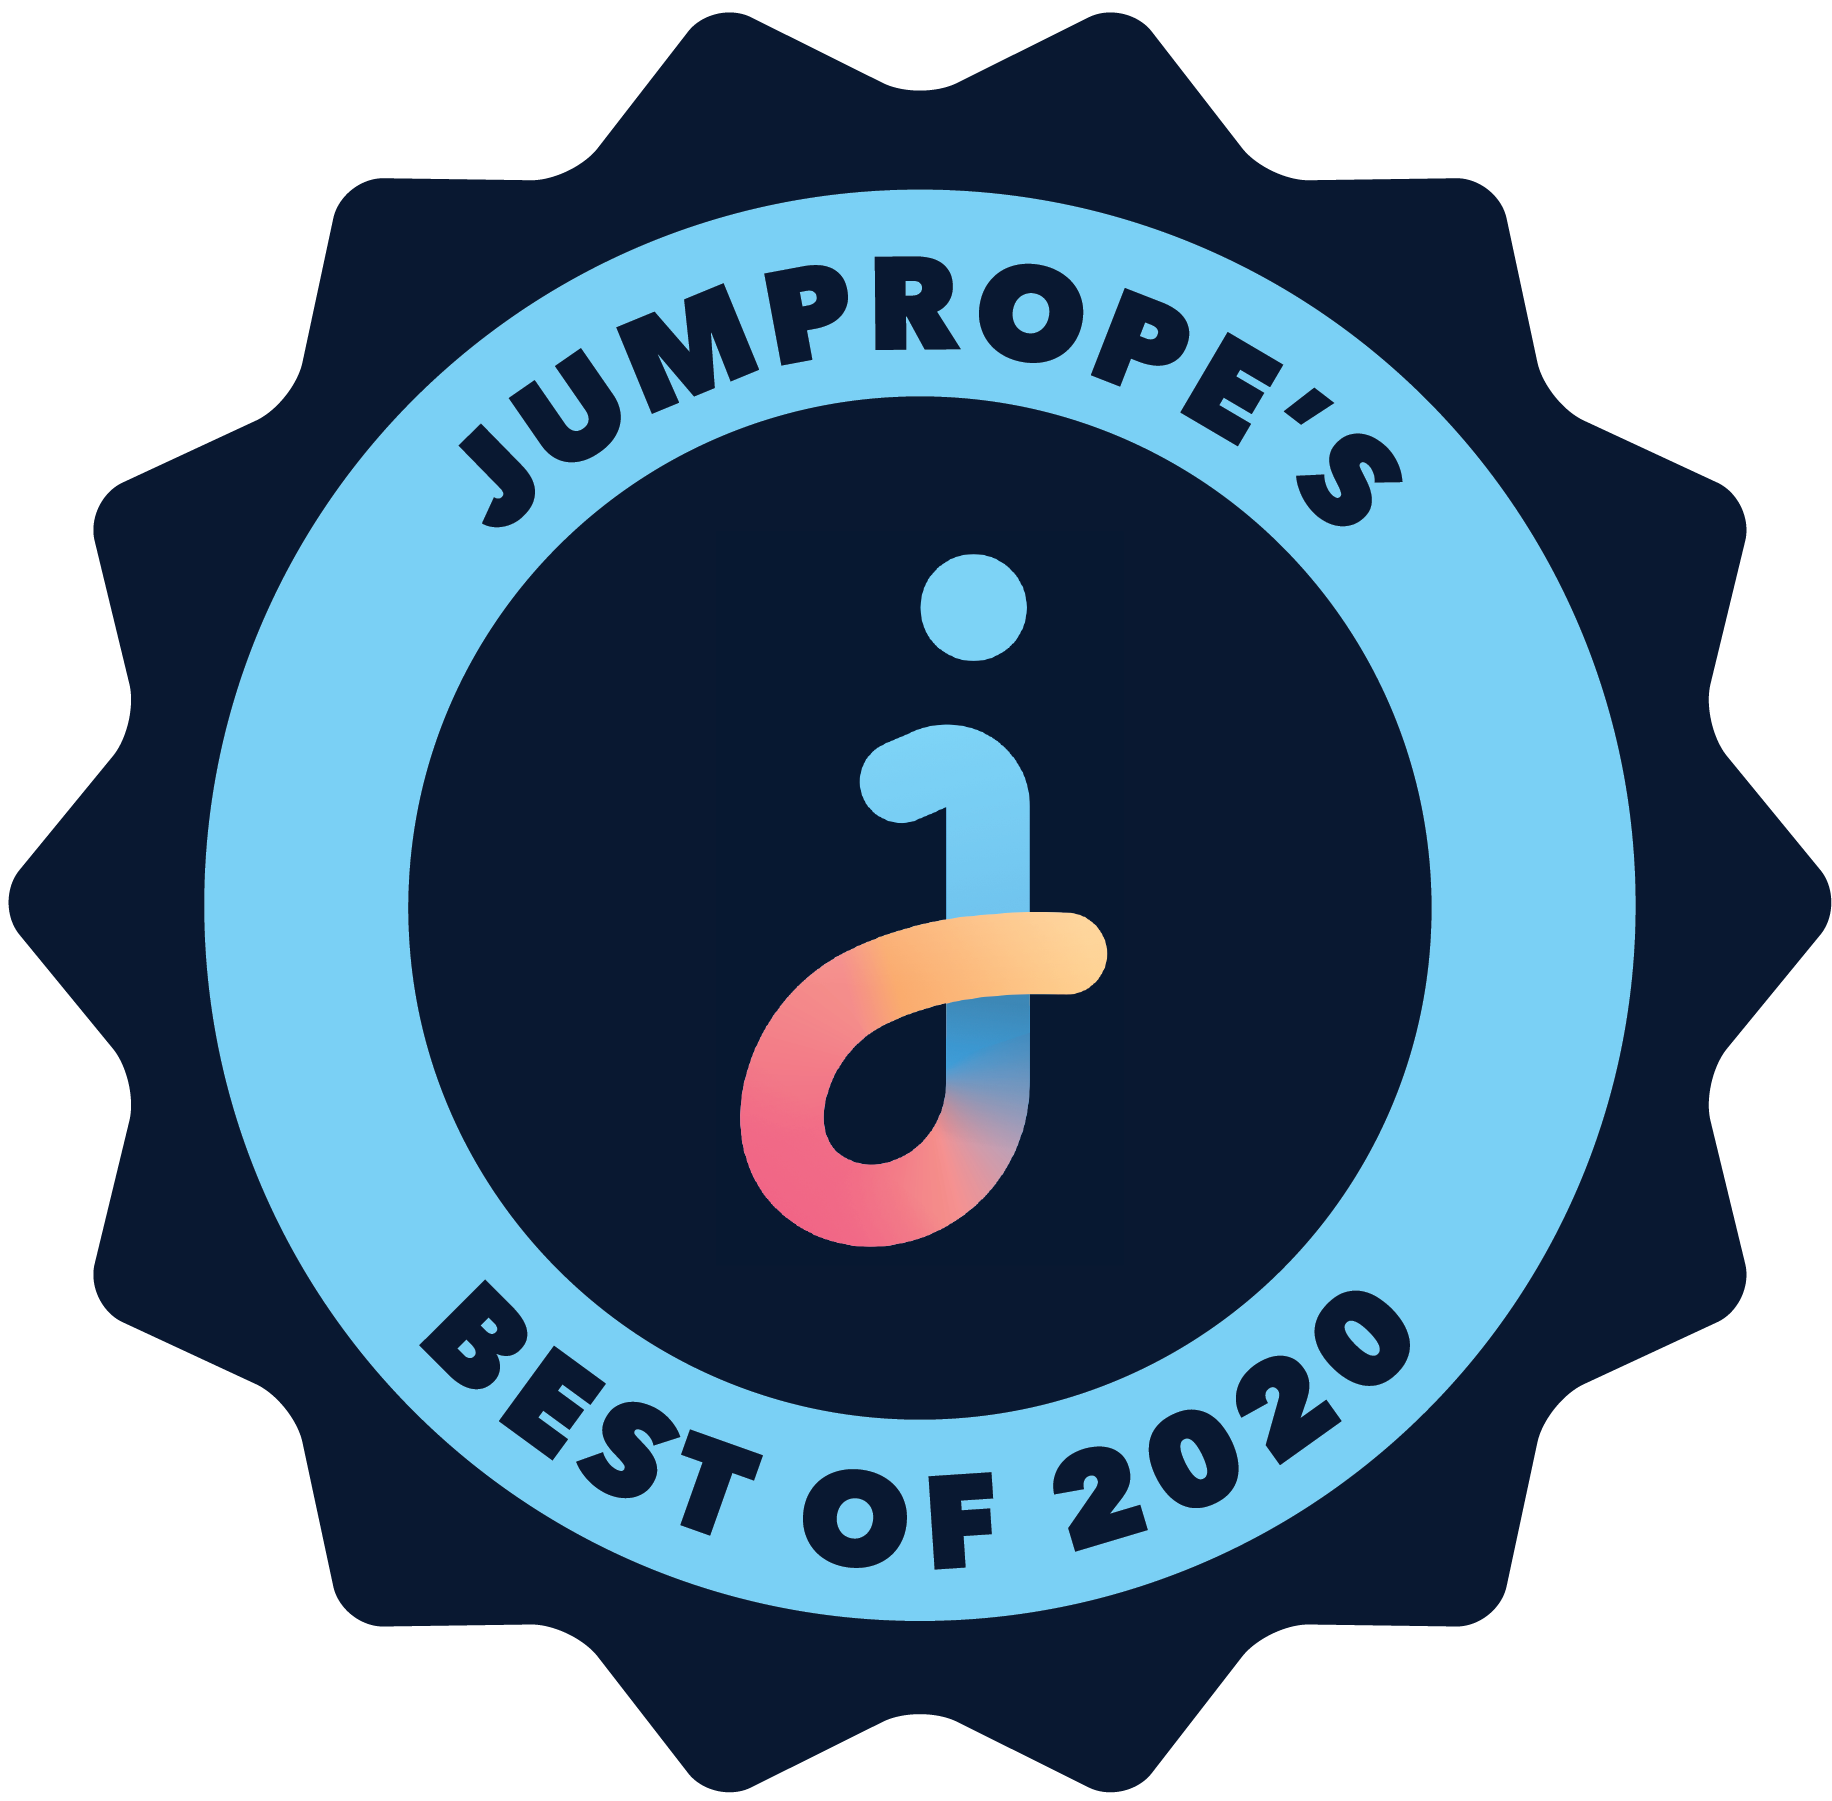 Jumprope's "Best of 2020" badge.